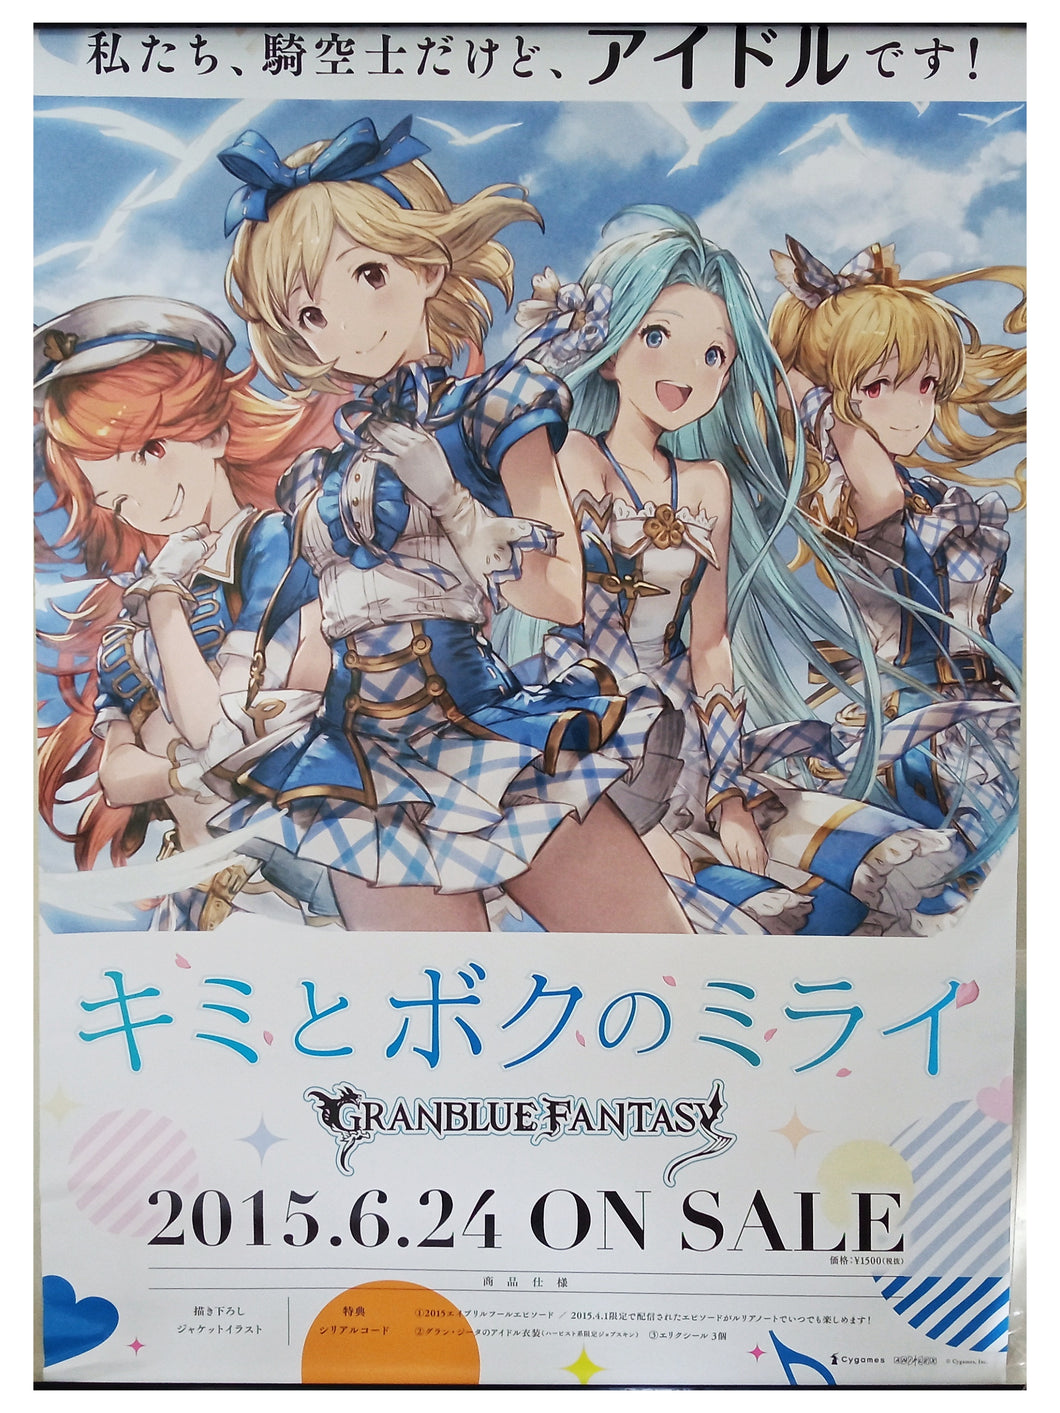 Kimi to Boku no Mirai - Granblue Fantasy - Marie / Gitallia / Vila - Grabble Game Hideo Minaba Cygames - Rare B2 Promotional Poster (Not for Sale)